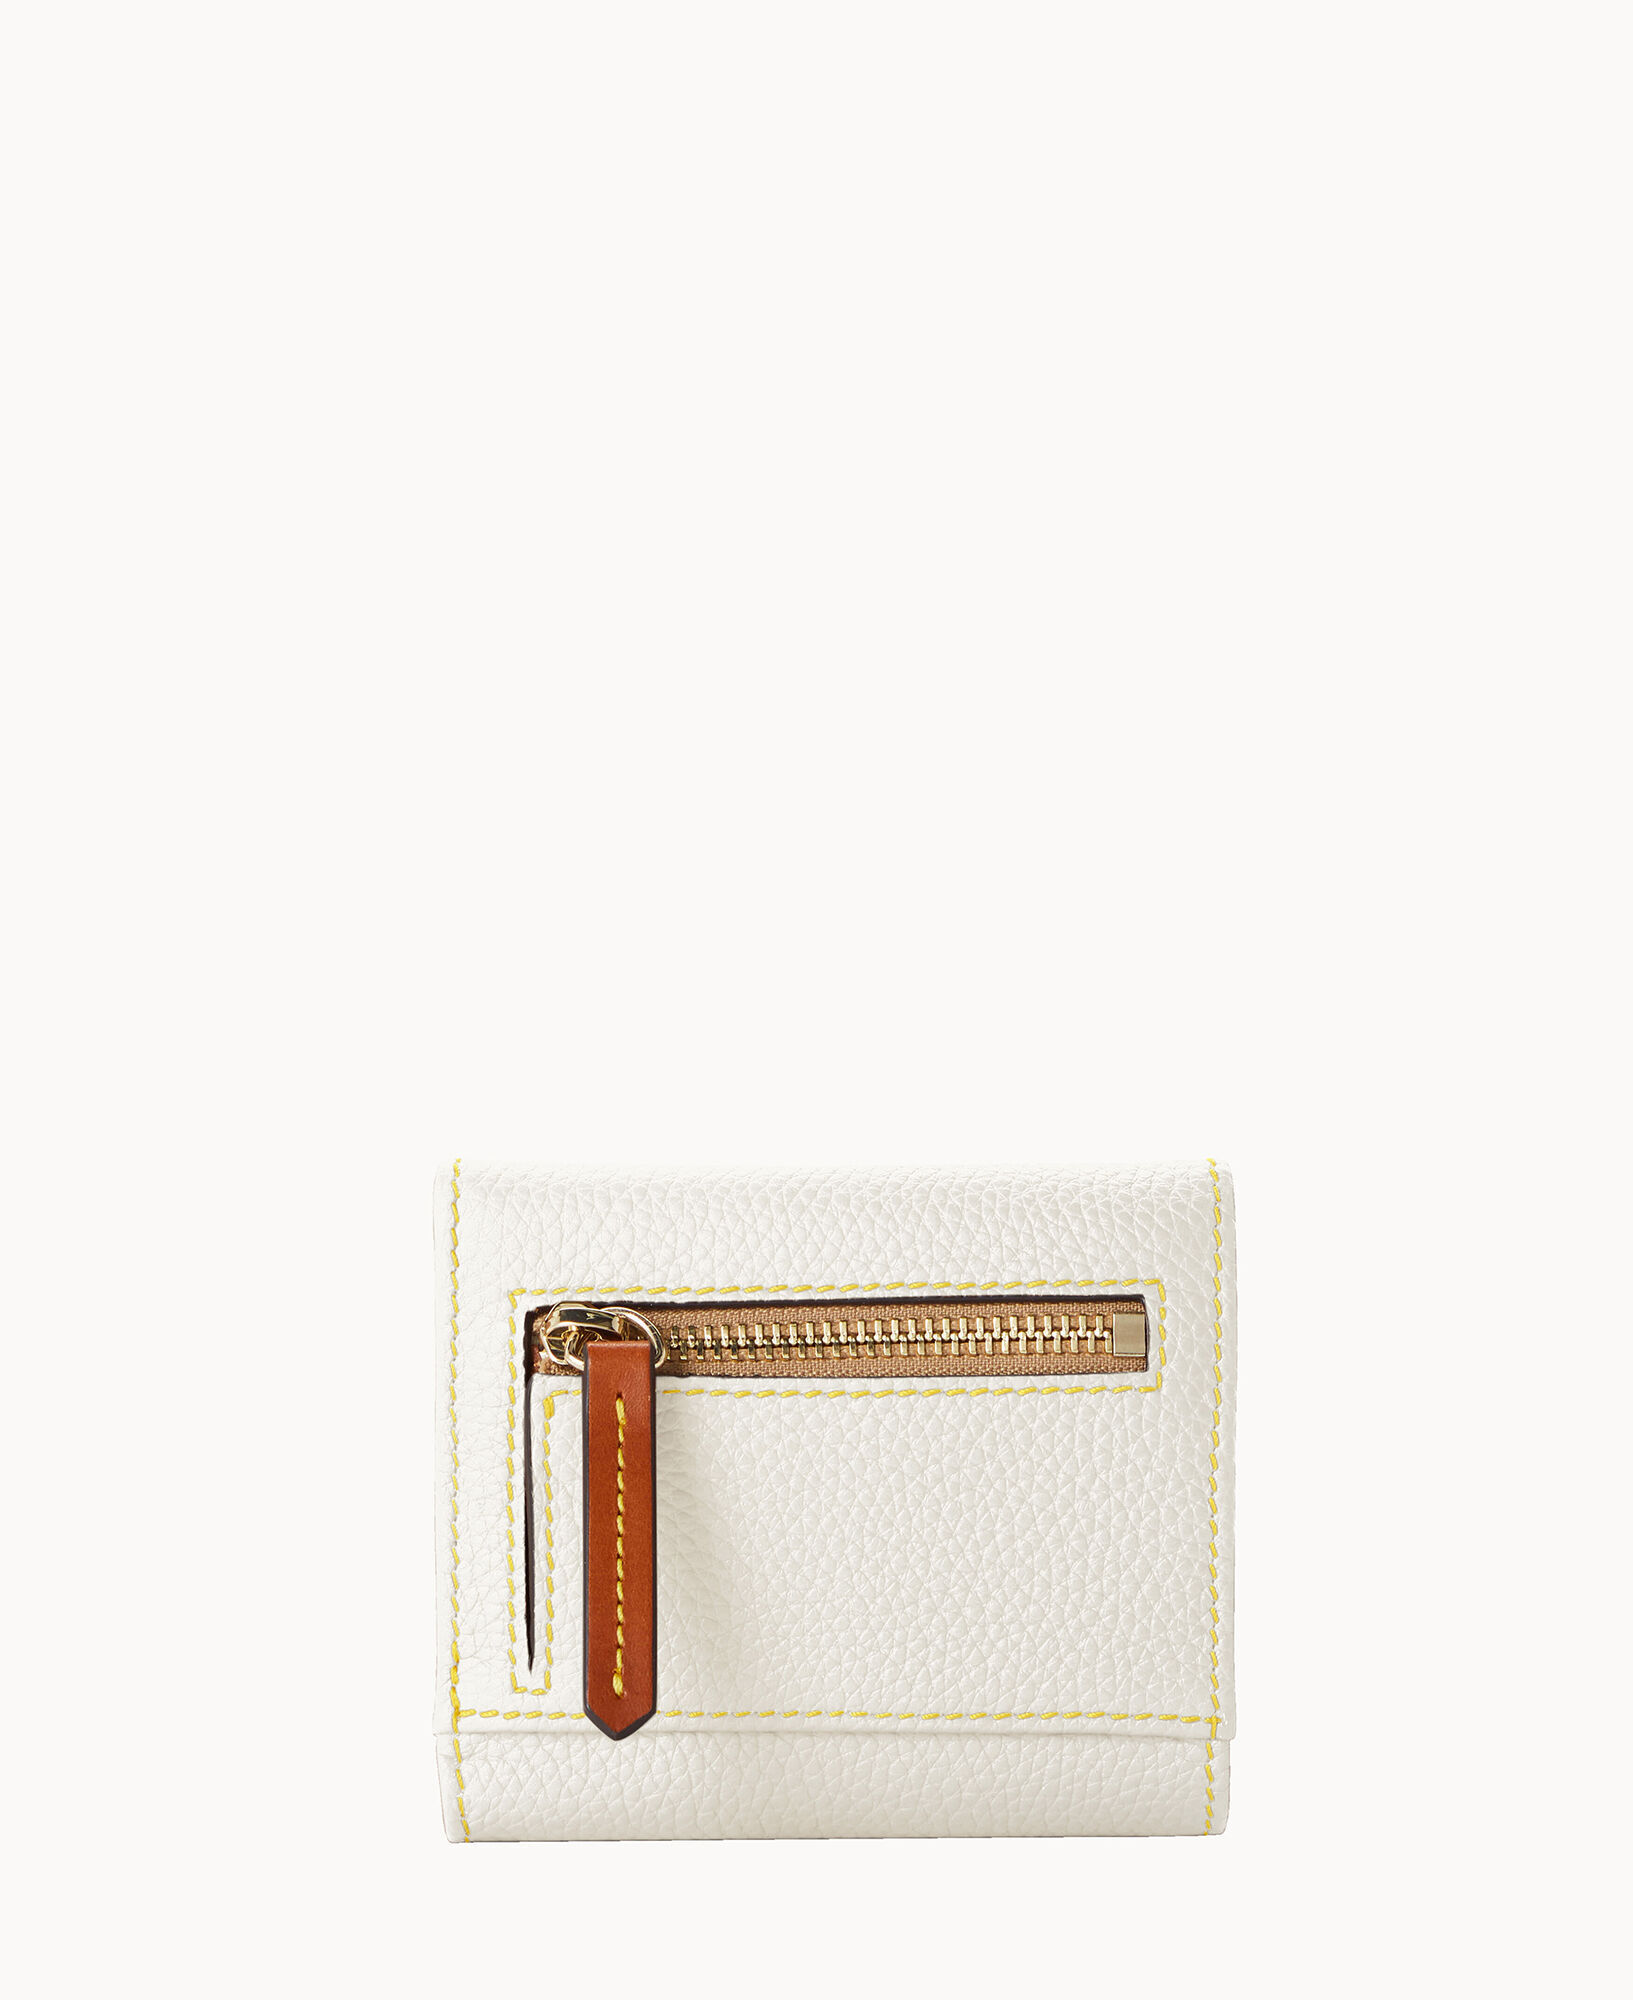 Dooney & Bourke Small Flap Pebble Leather Wallet